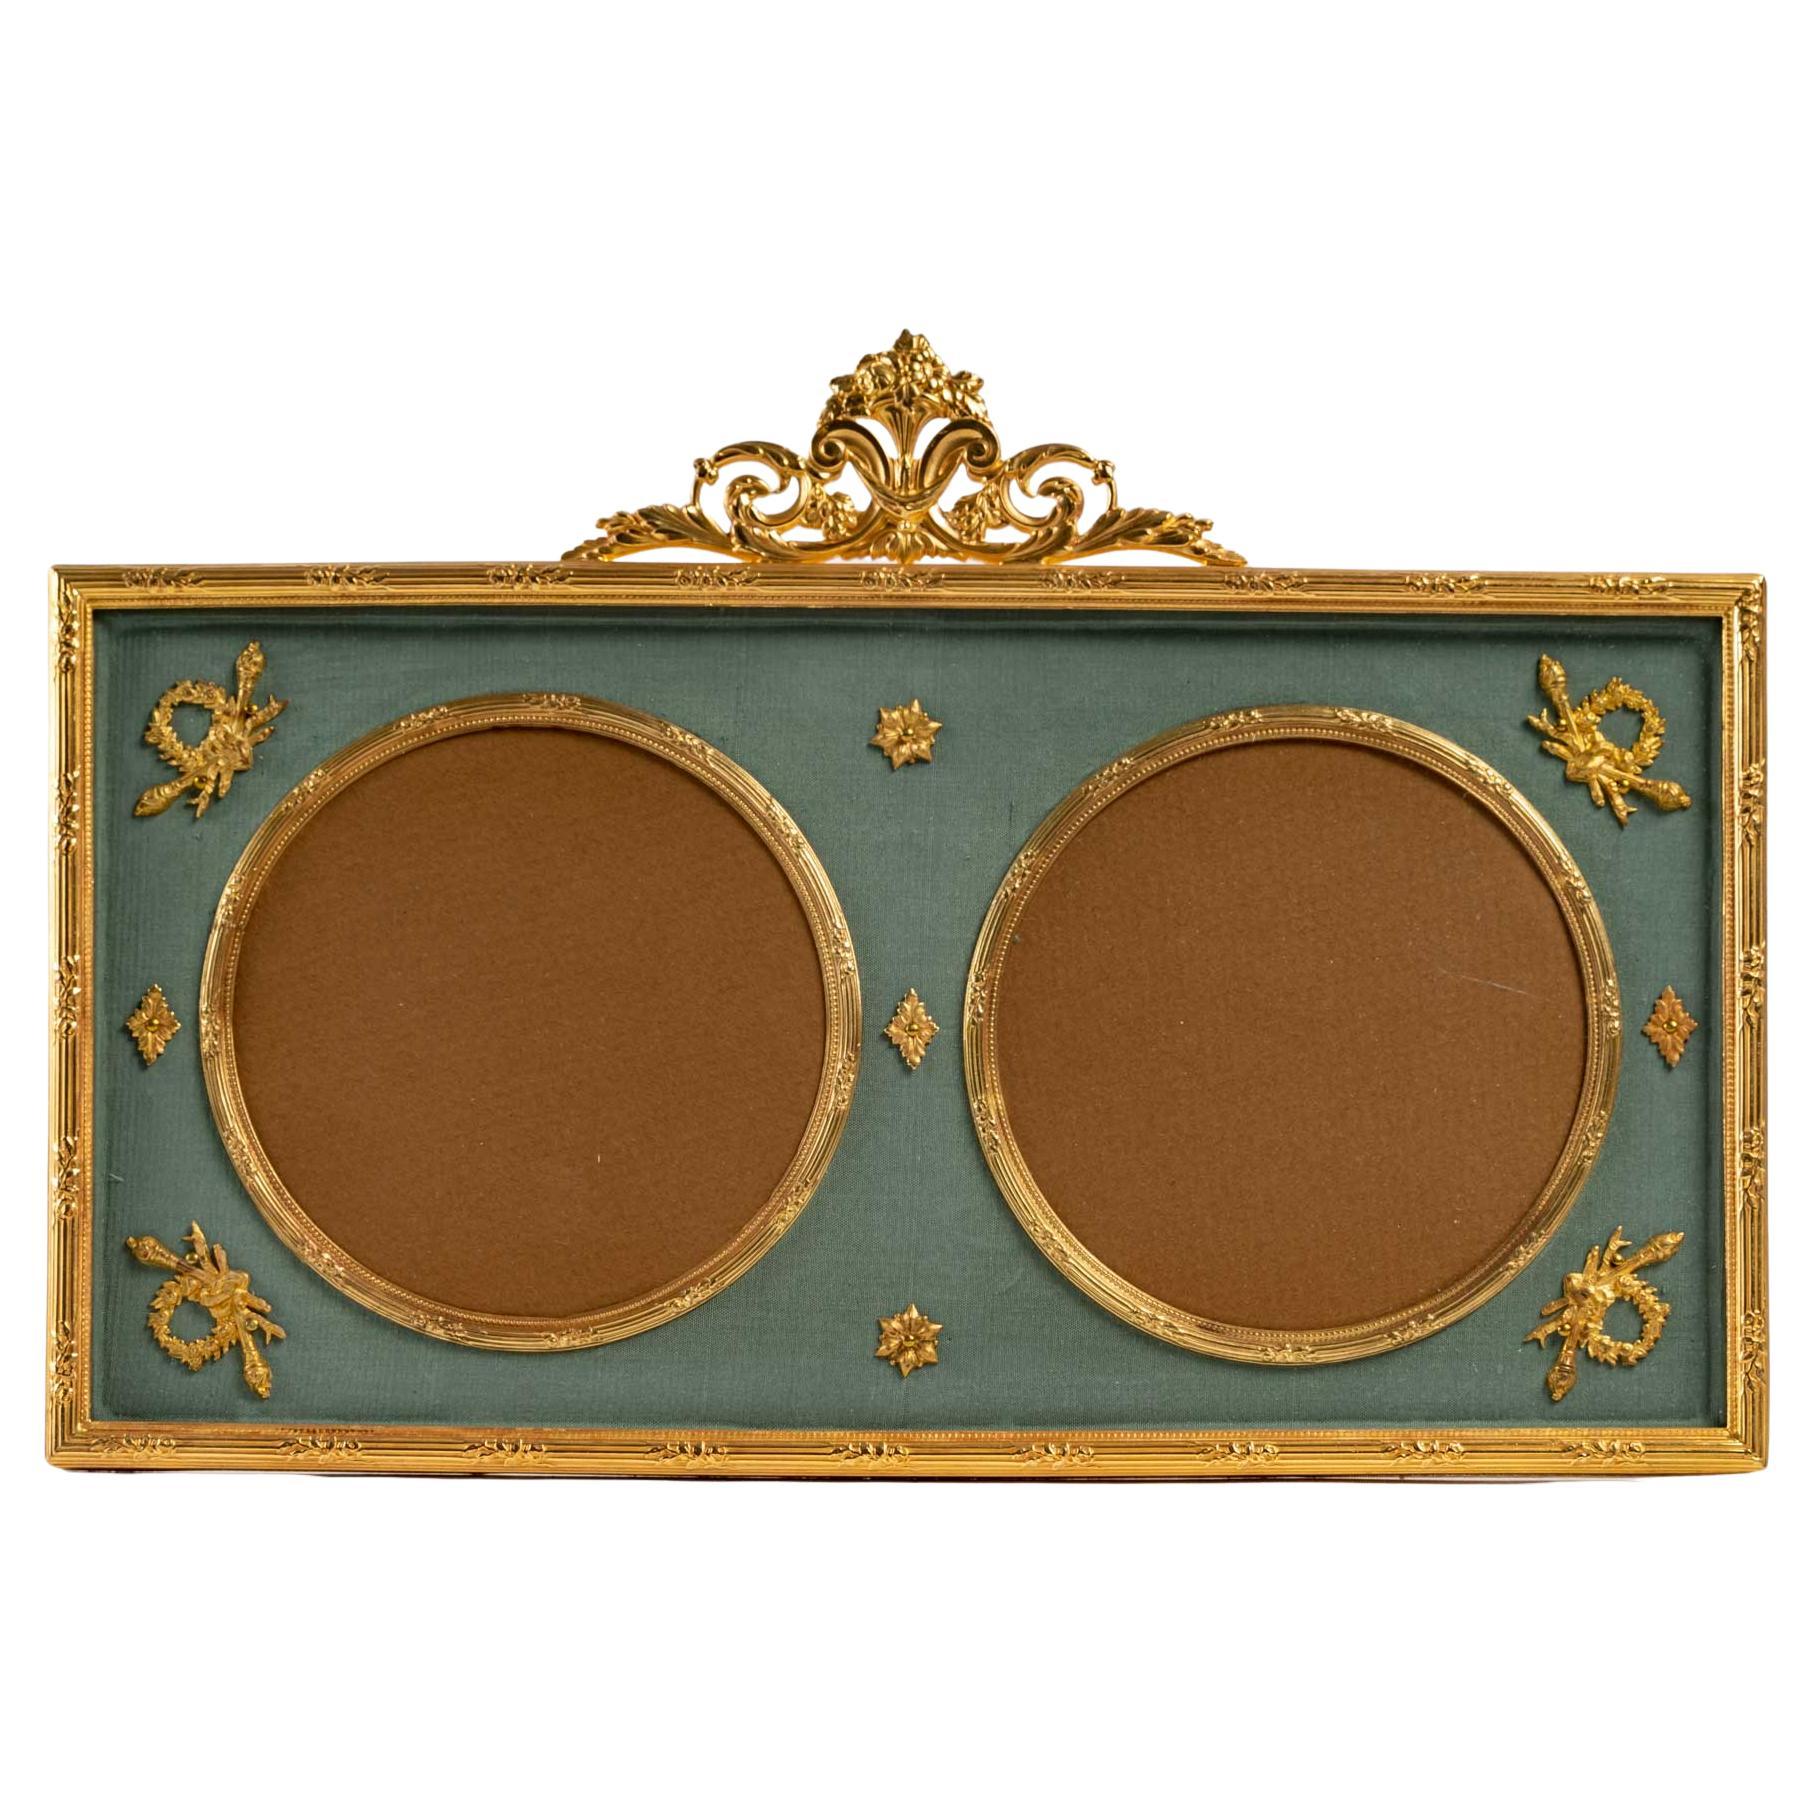 Gilt bronze photo frame, 19th century